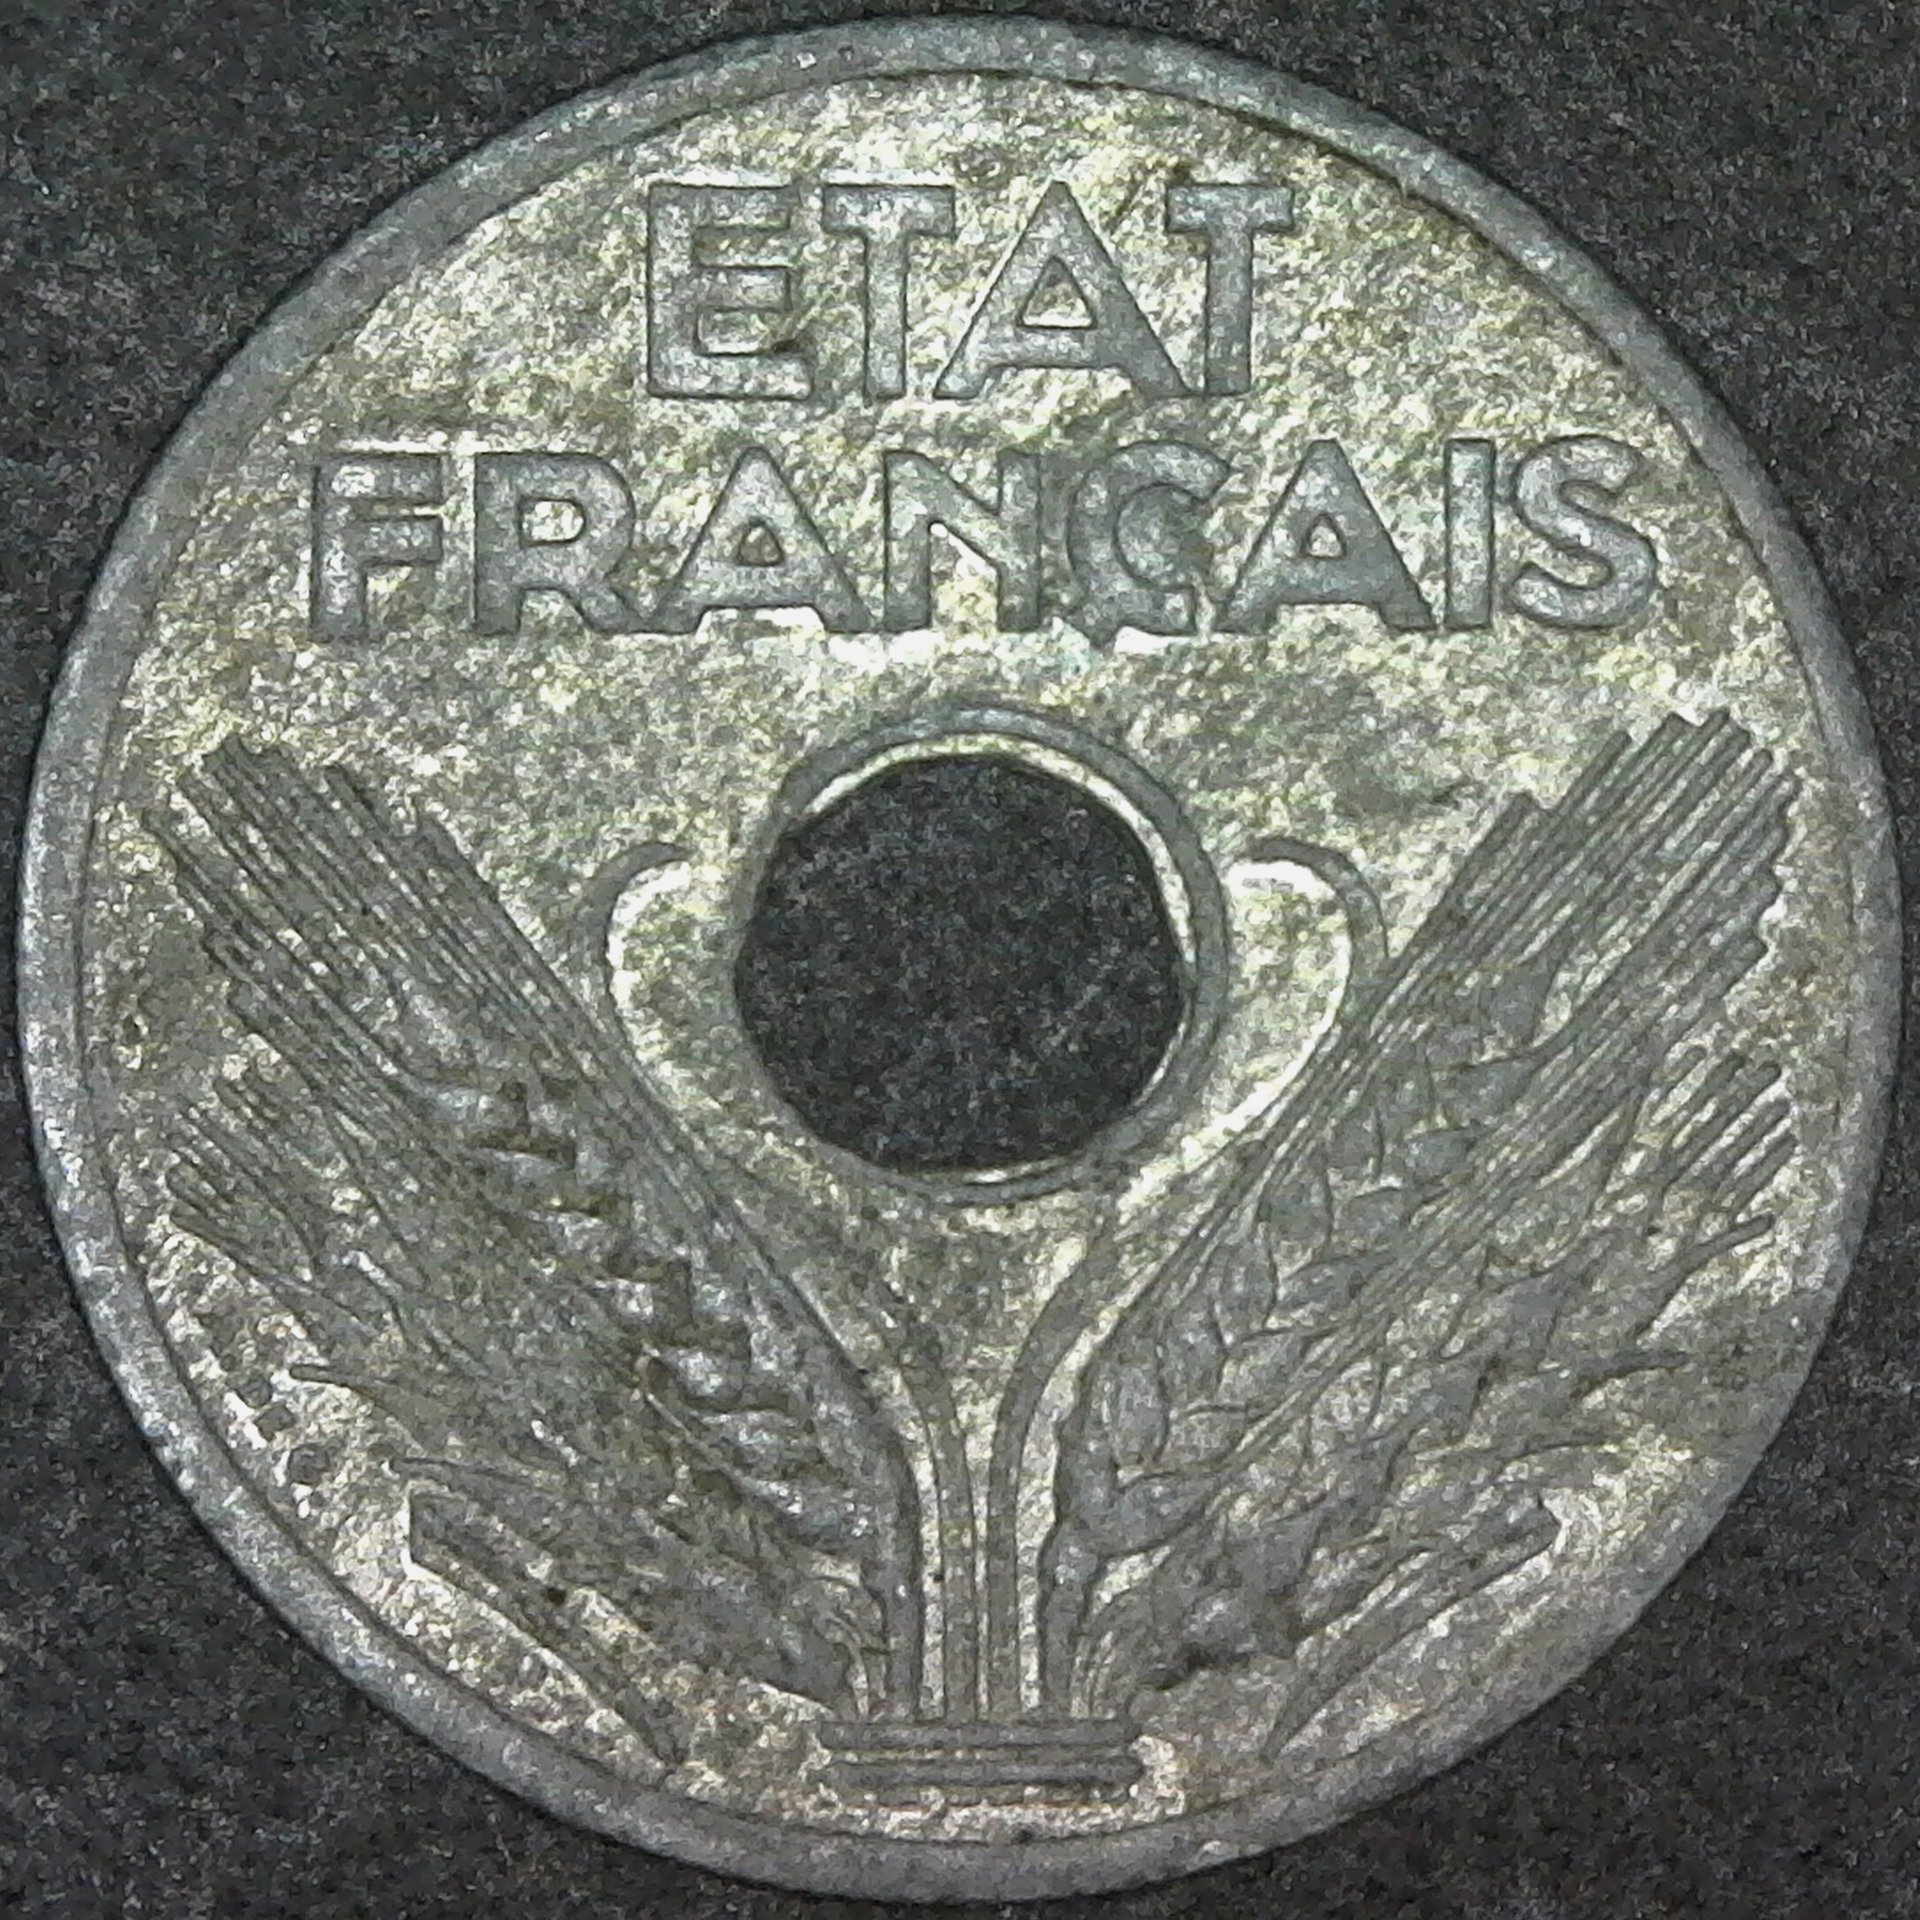 France Vingt centimes 1941 reverse.jpg